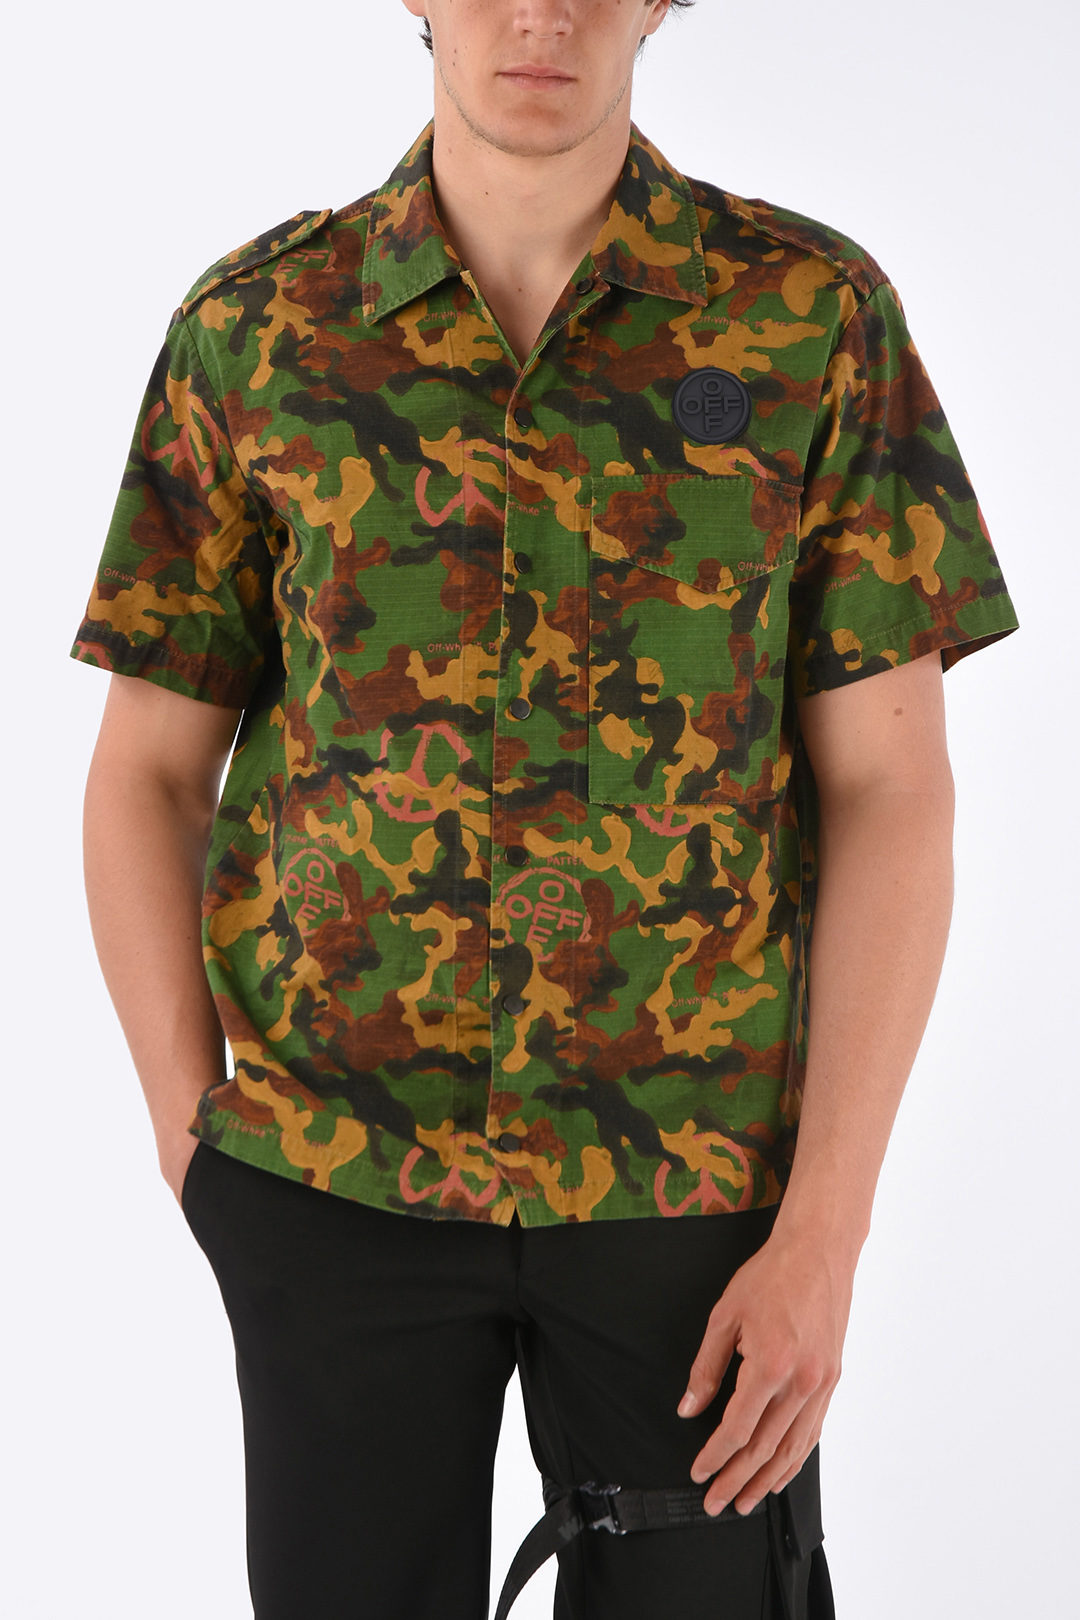 Off-White Camouflage Short Sleeve Shirt men - Glamood Outlet